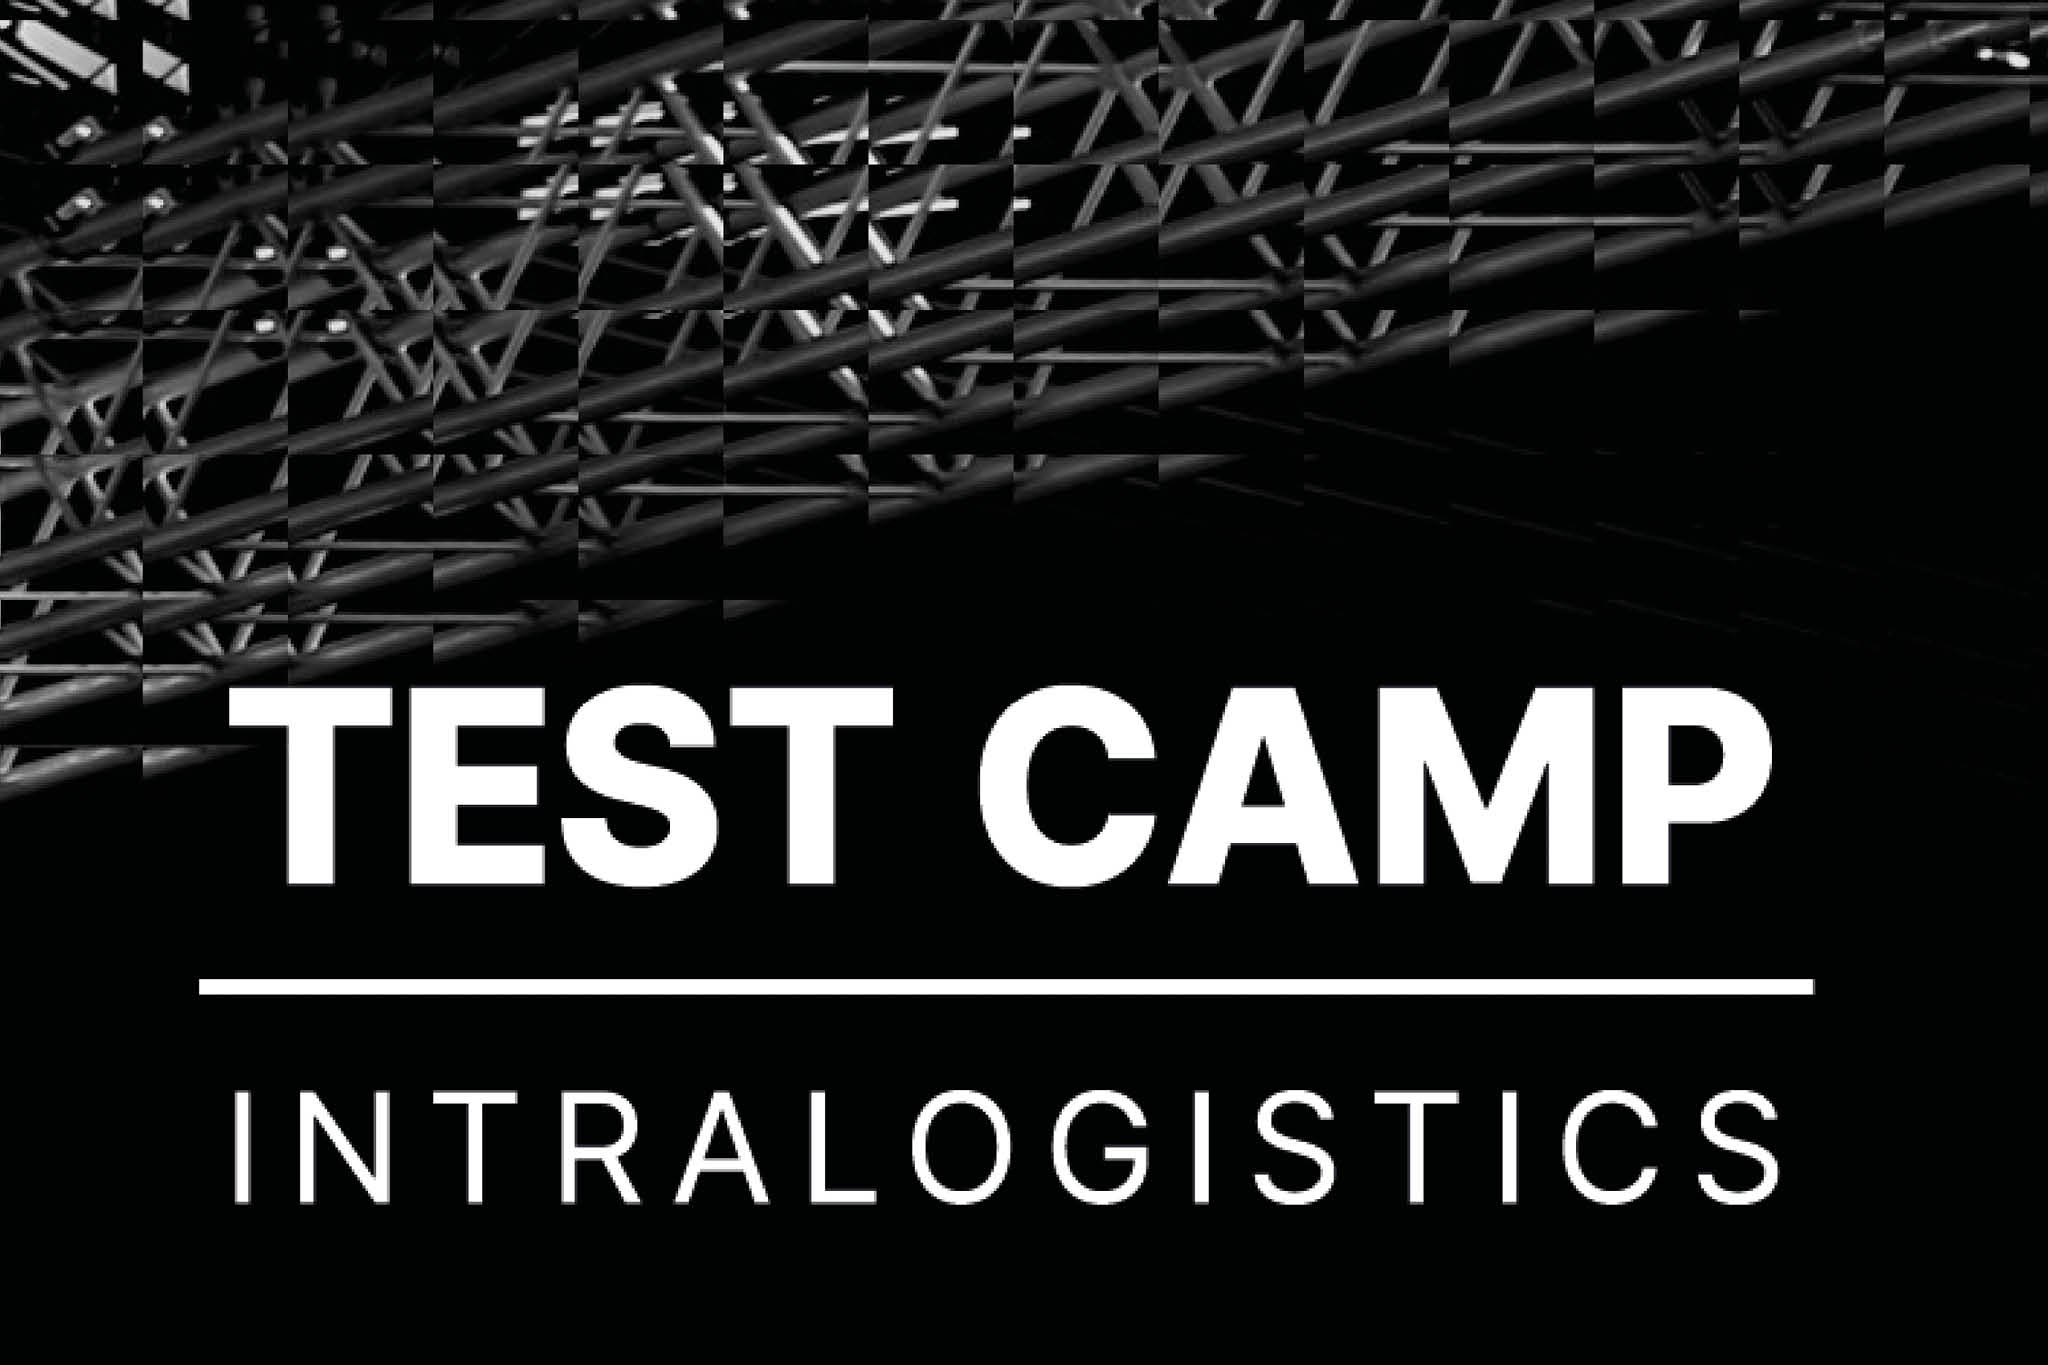 TEST CAMP INTRALOGISTICS